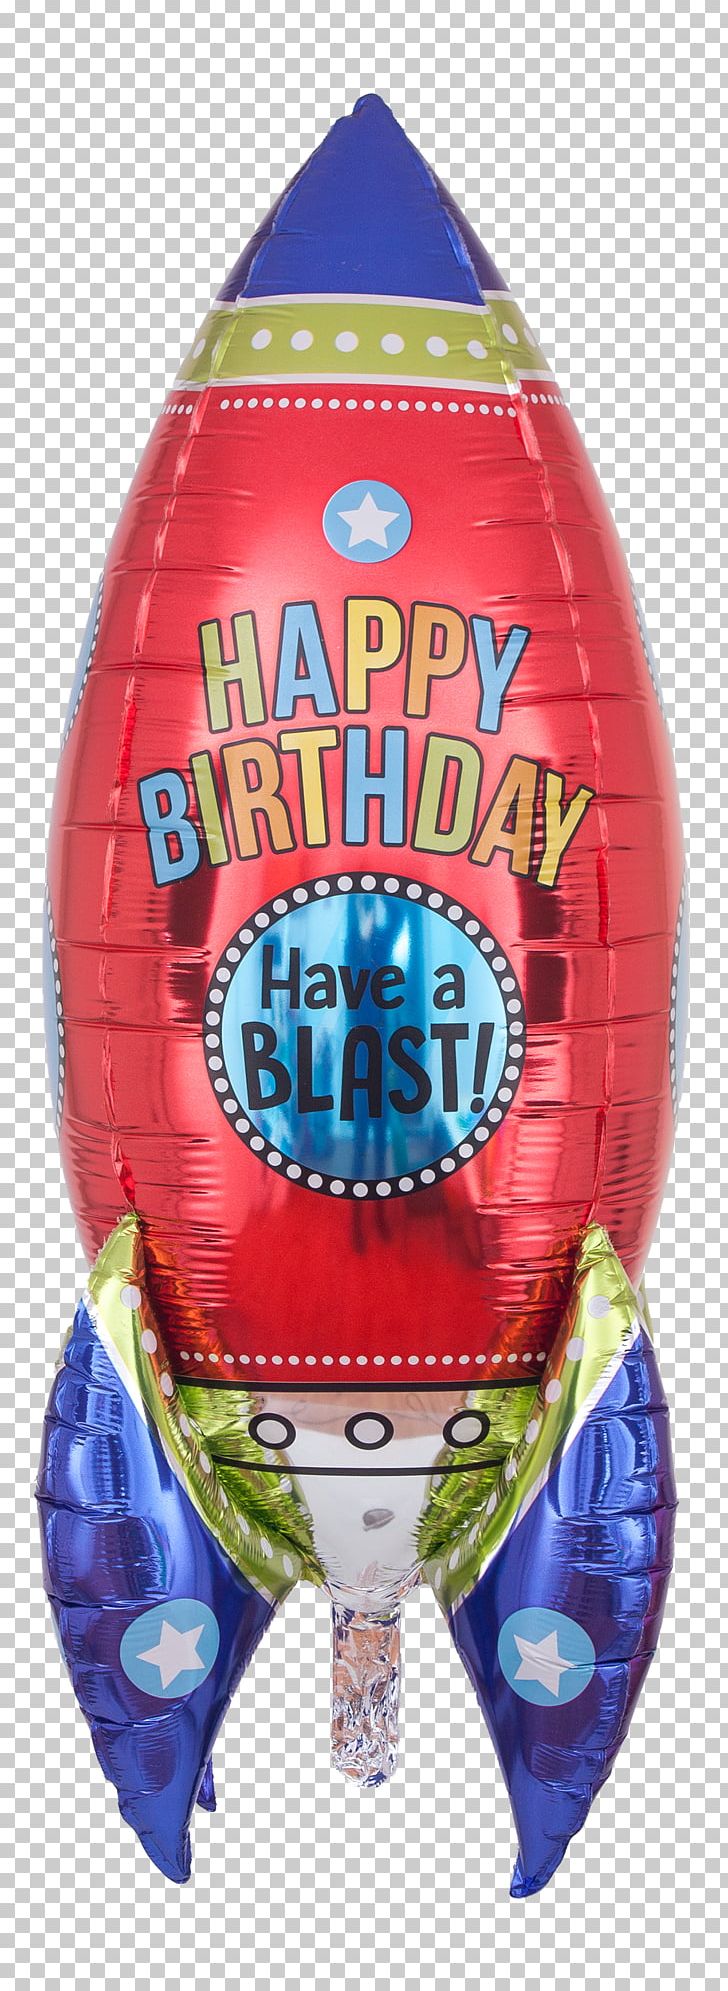 Toy Balloon Balloon Rocket Birthday Balloon Mail PNG, Clipart, Balloon, Balloon Mail, Balloon Rocket, Birthday, Boy Free PNG Download